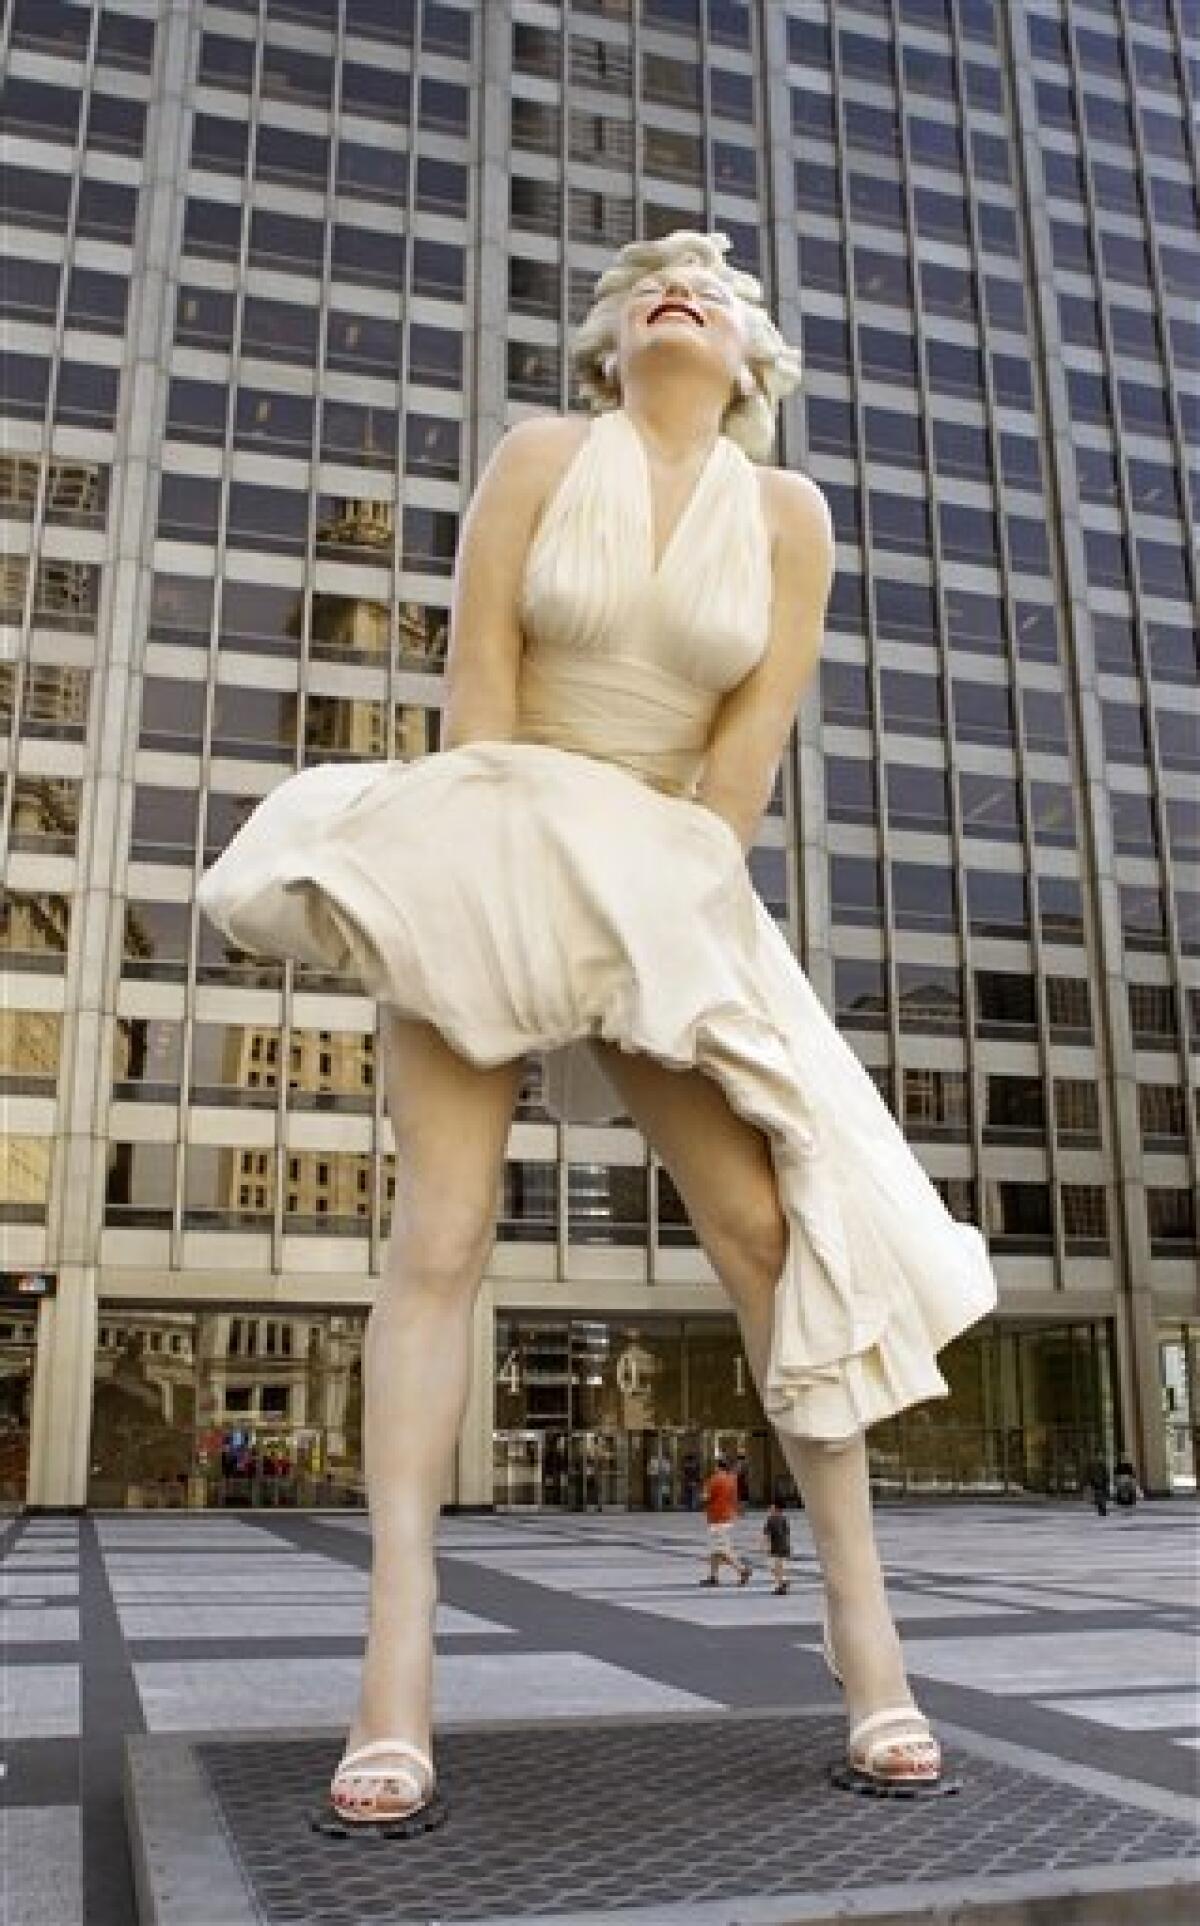 Was Marilyn Monroe wearing panties when she stood over a street